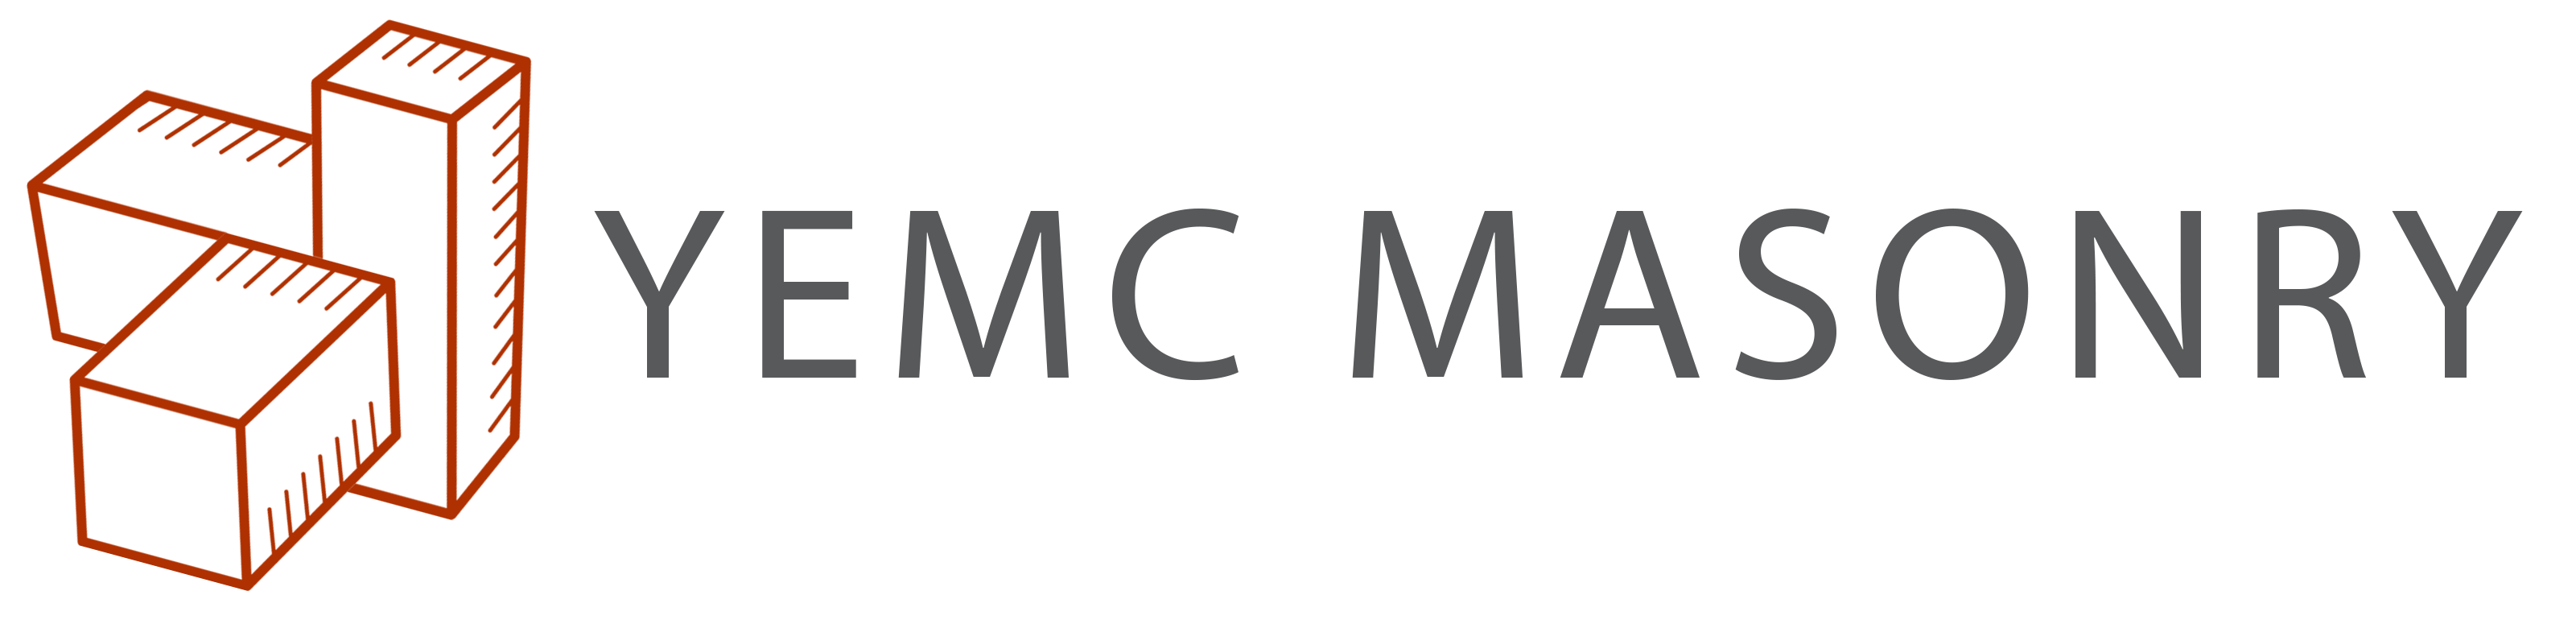 yemc-masonry-logo copy